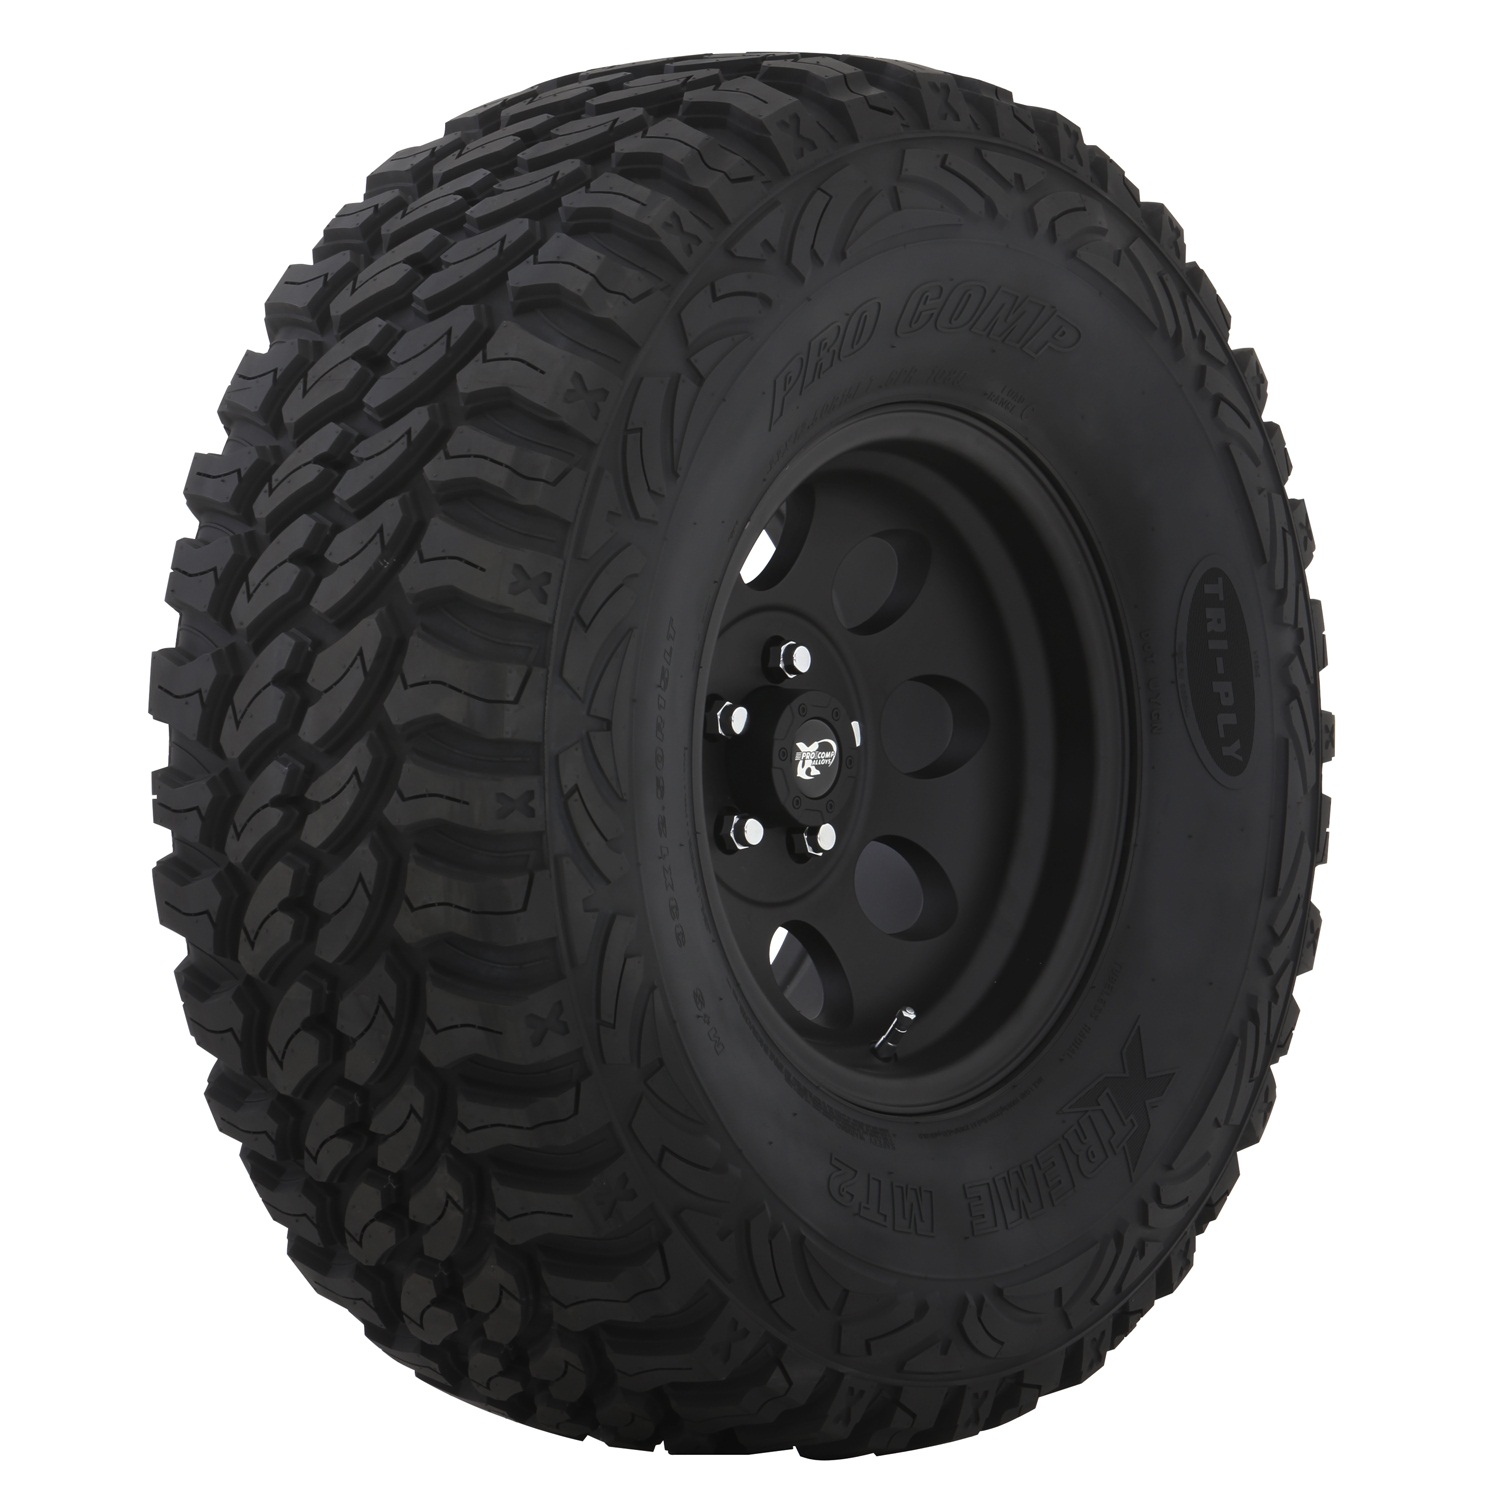 Pro Comp Tires Pro Comp Tires 76315 Pro Comp Xtreme Mud Terrain 2; Tire